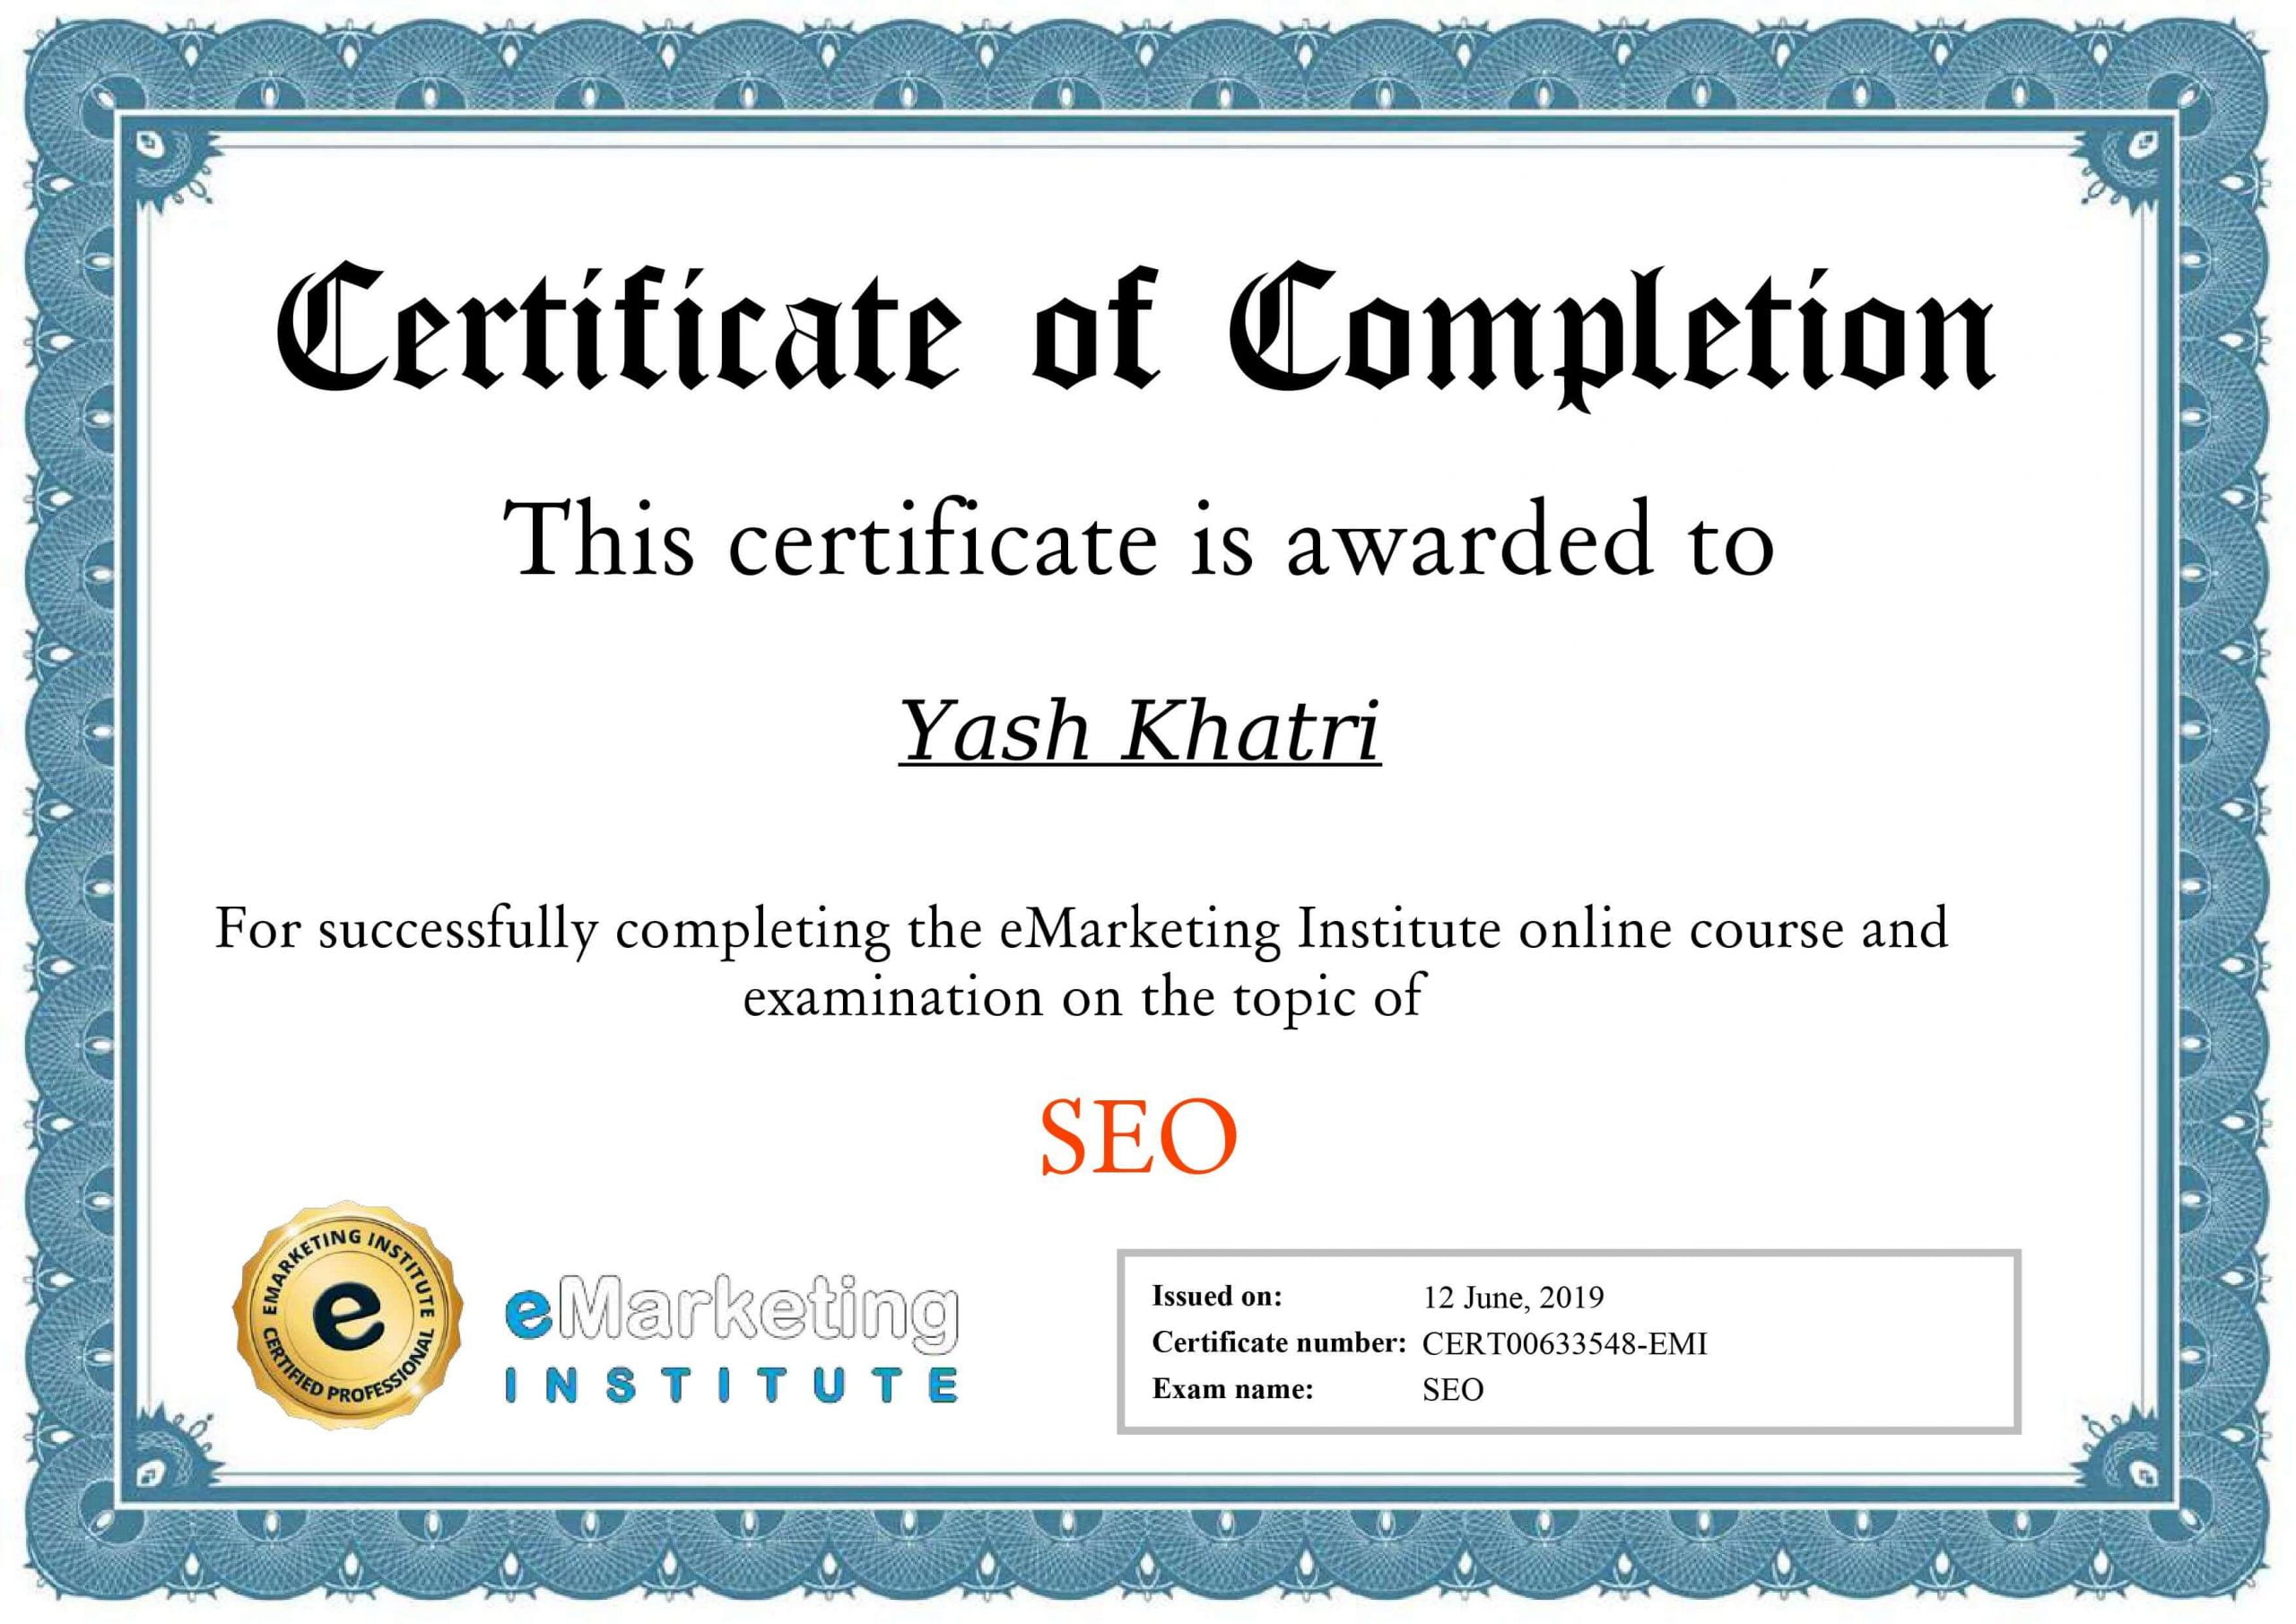 Yash A KhatriSarch Engine Optimization Certificate